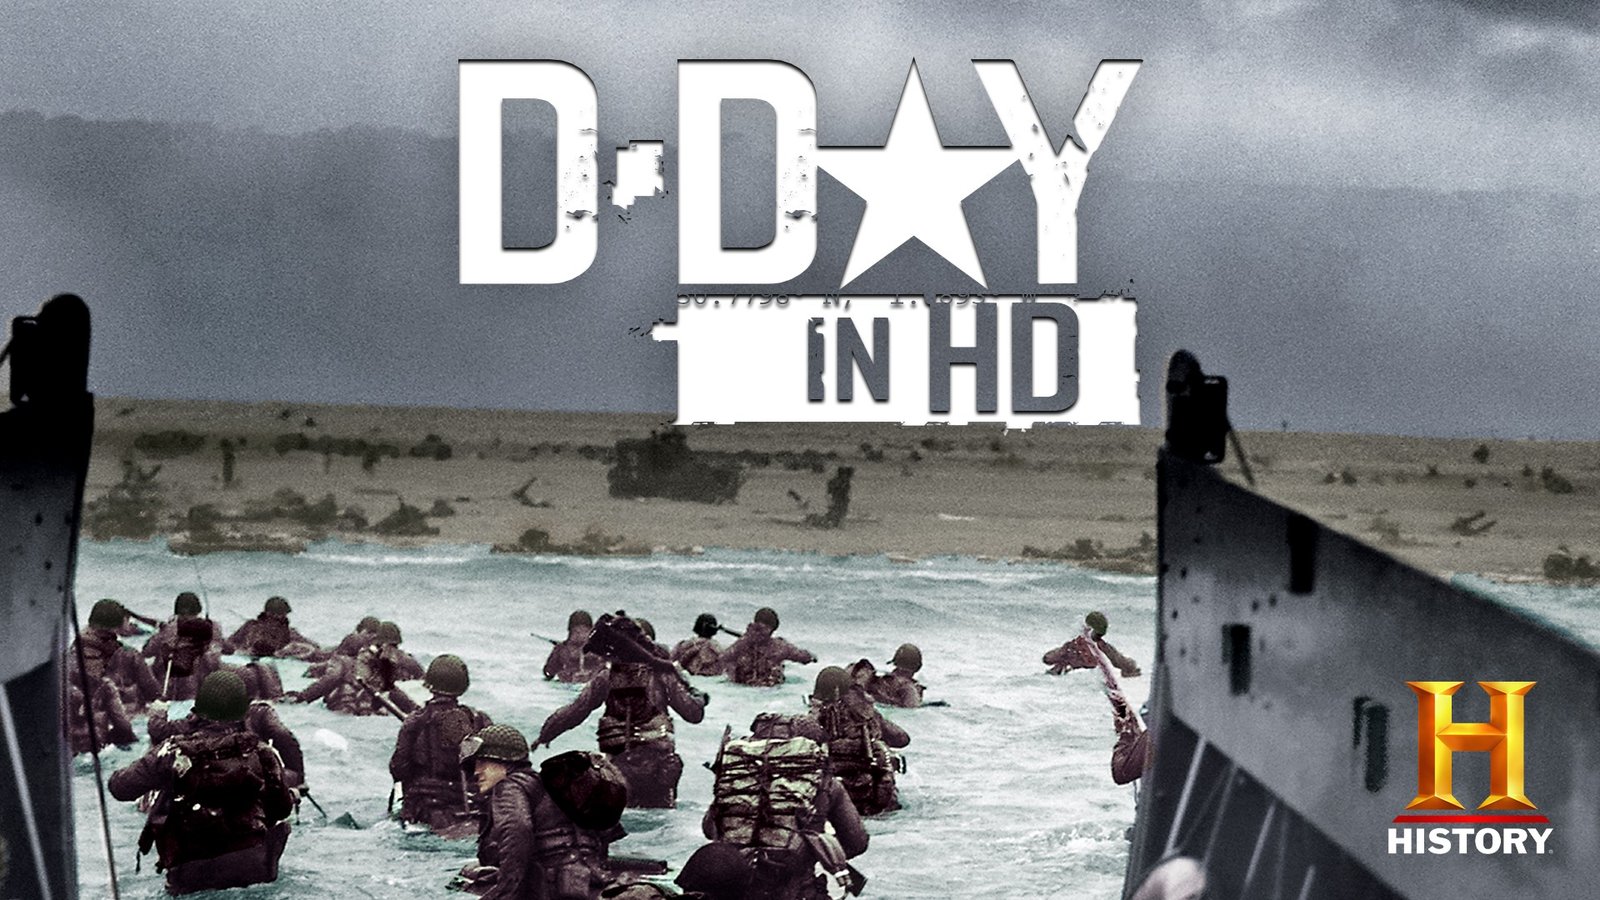 D-Day in HD